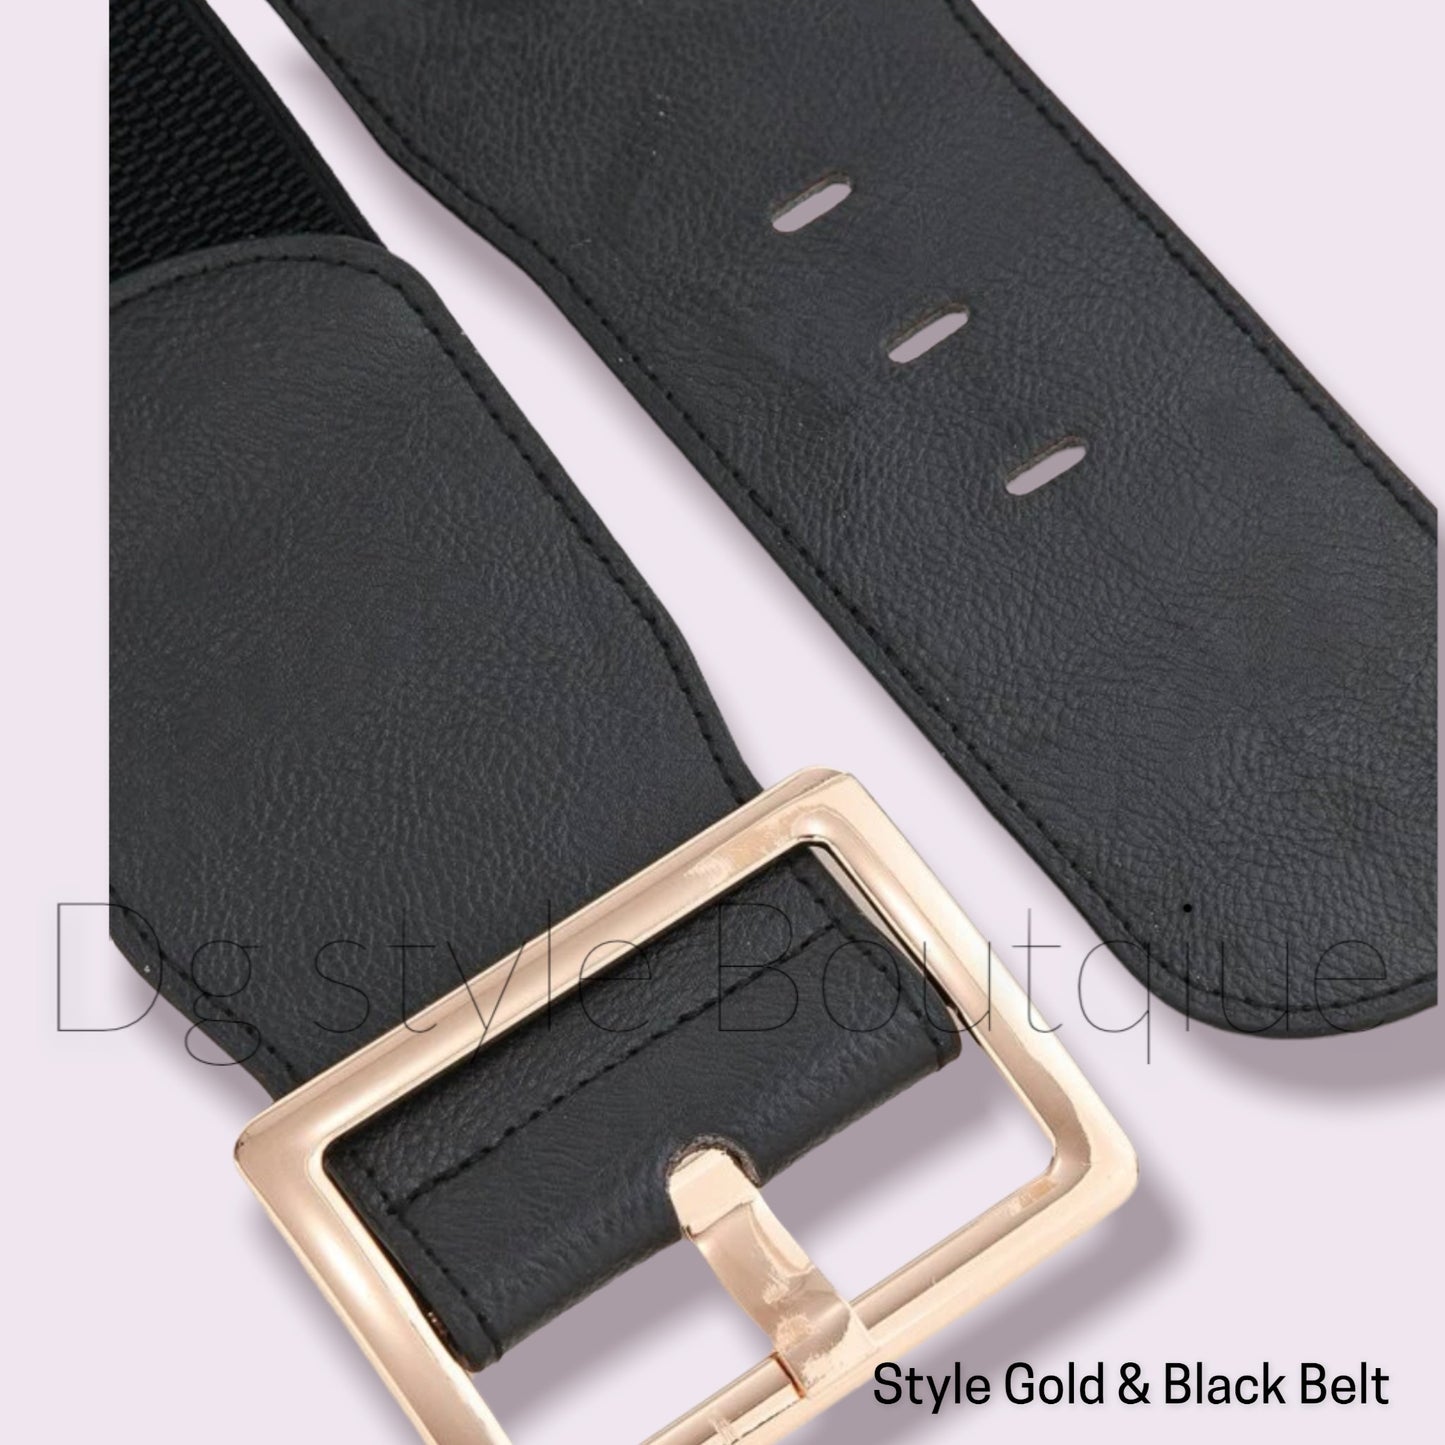 Style Gold & Black Belt